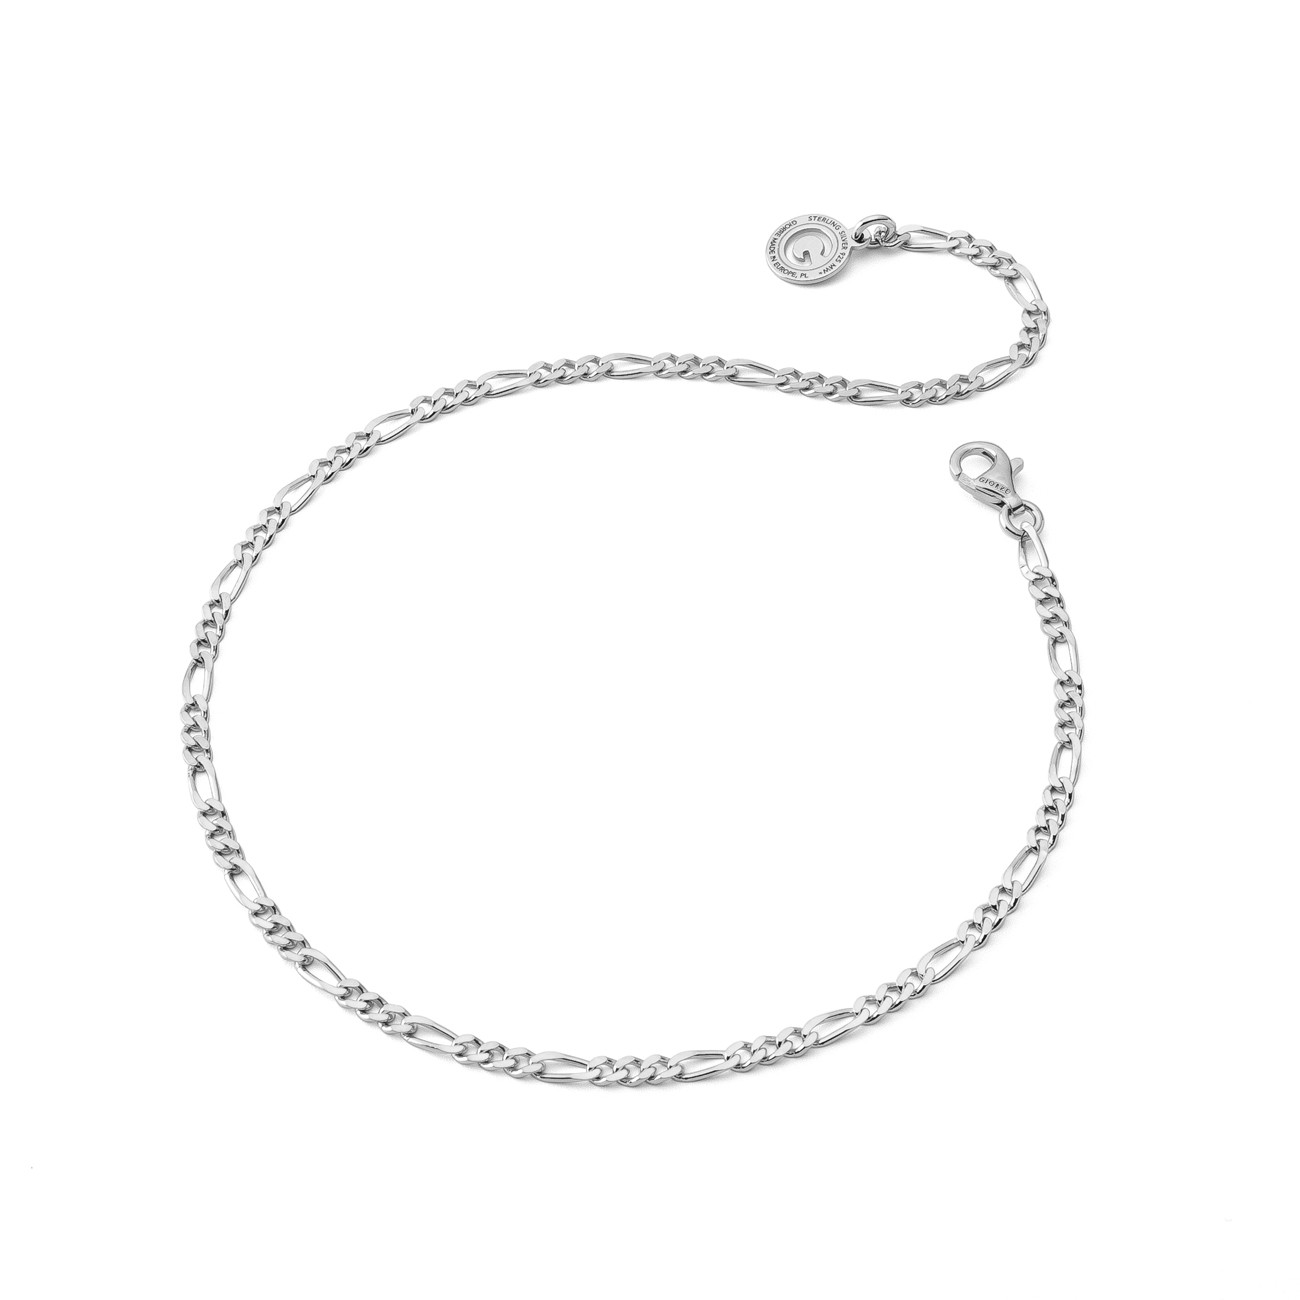 Silver ankle bracelet, sterling silver 925